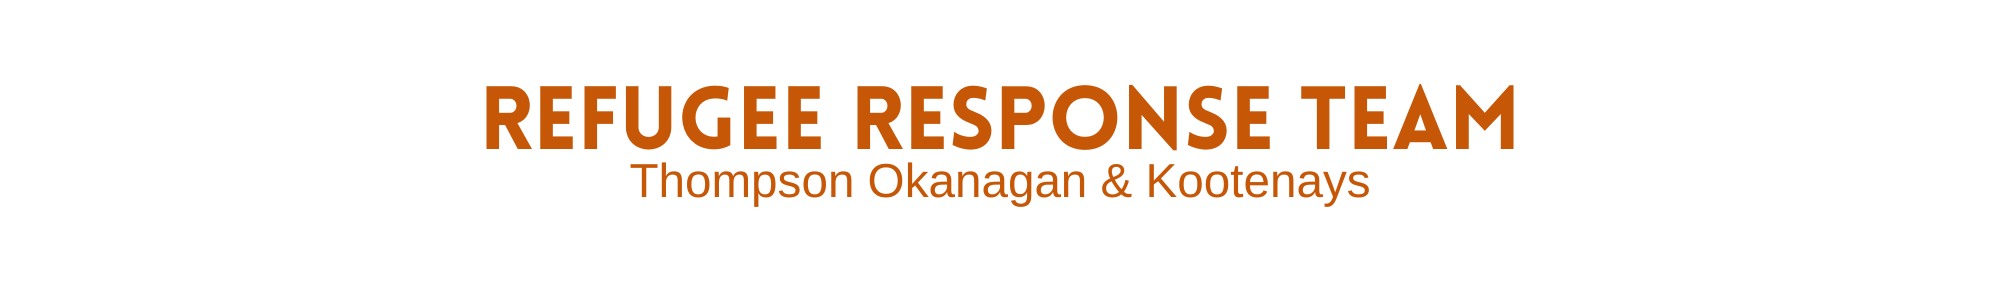 Refugee Response Team - Thompson Okanagan & Kootenays